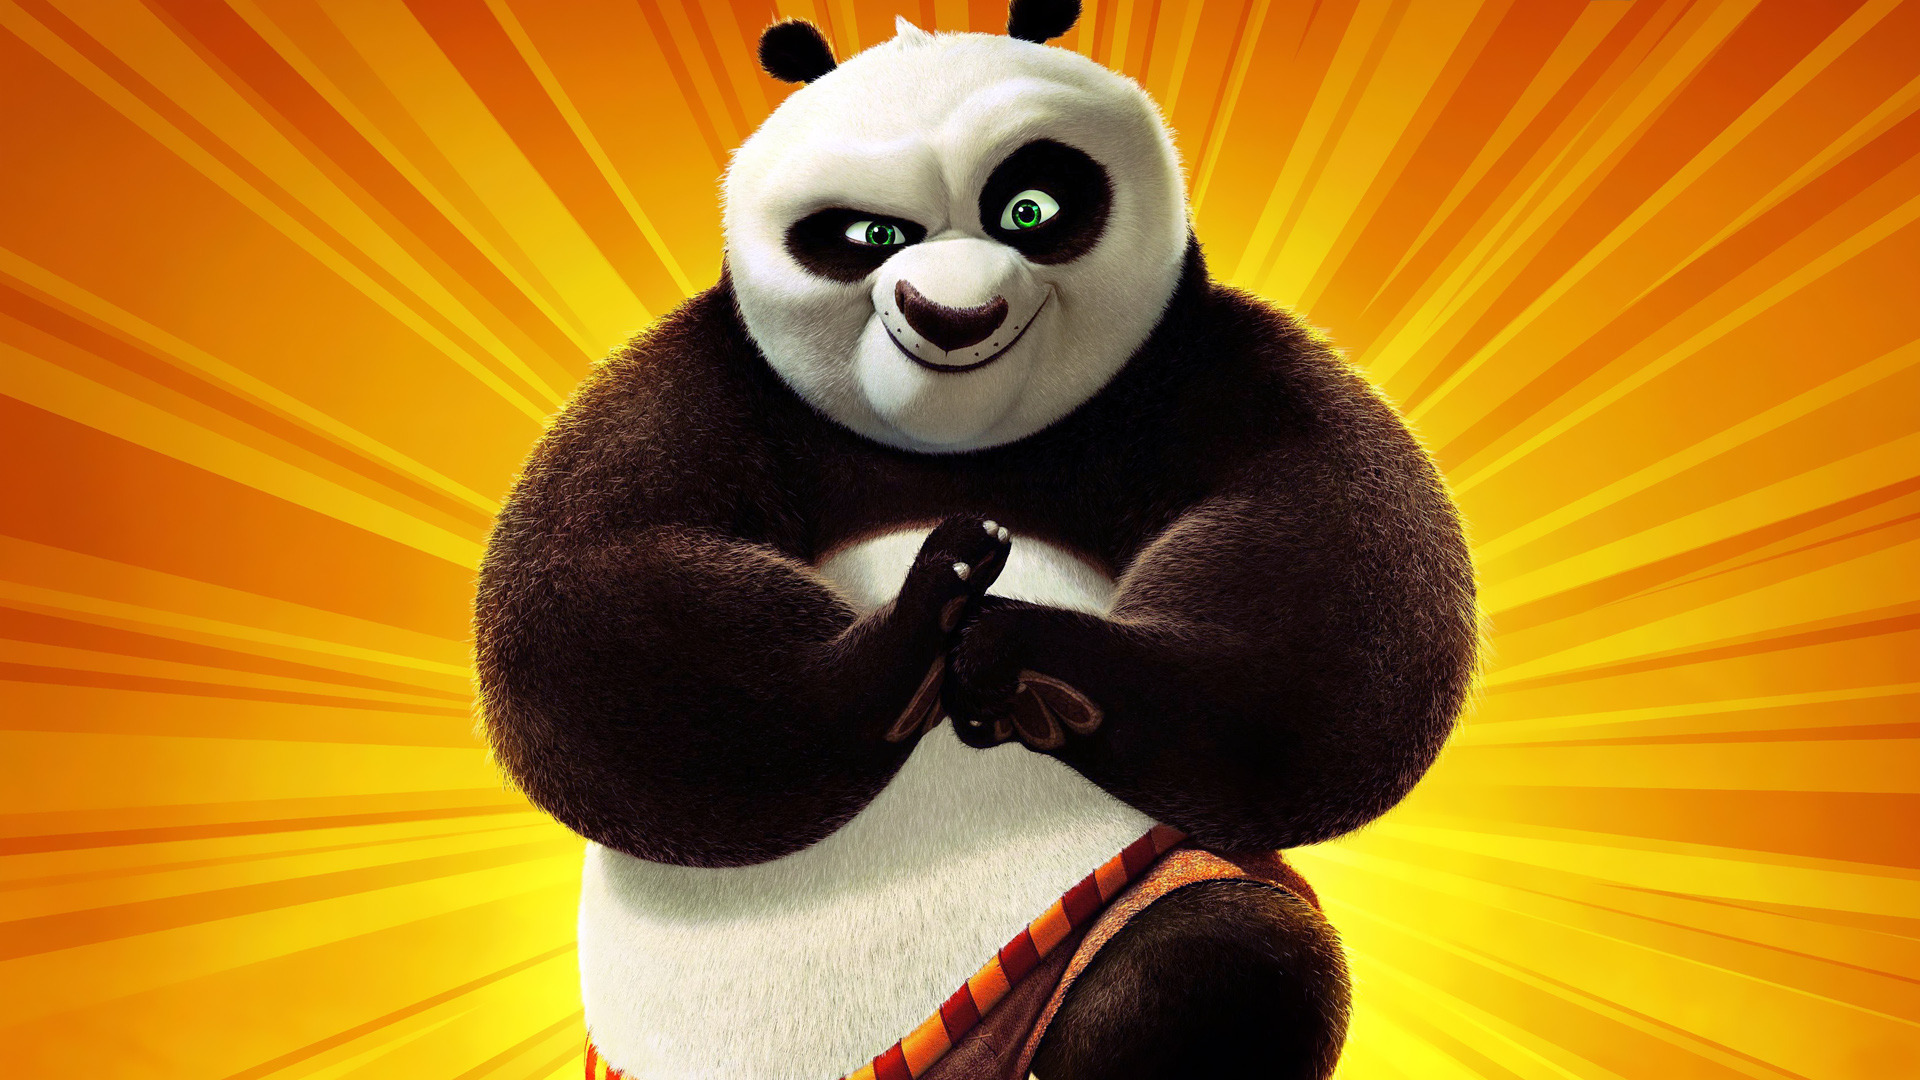 407227 descargar imagen kung fu panda, películas, kung fu panda 2, po (kung fu panda): fondos de pantalla y protectores de pantalla gratis